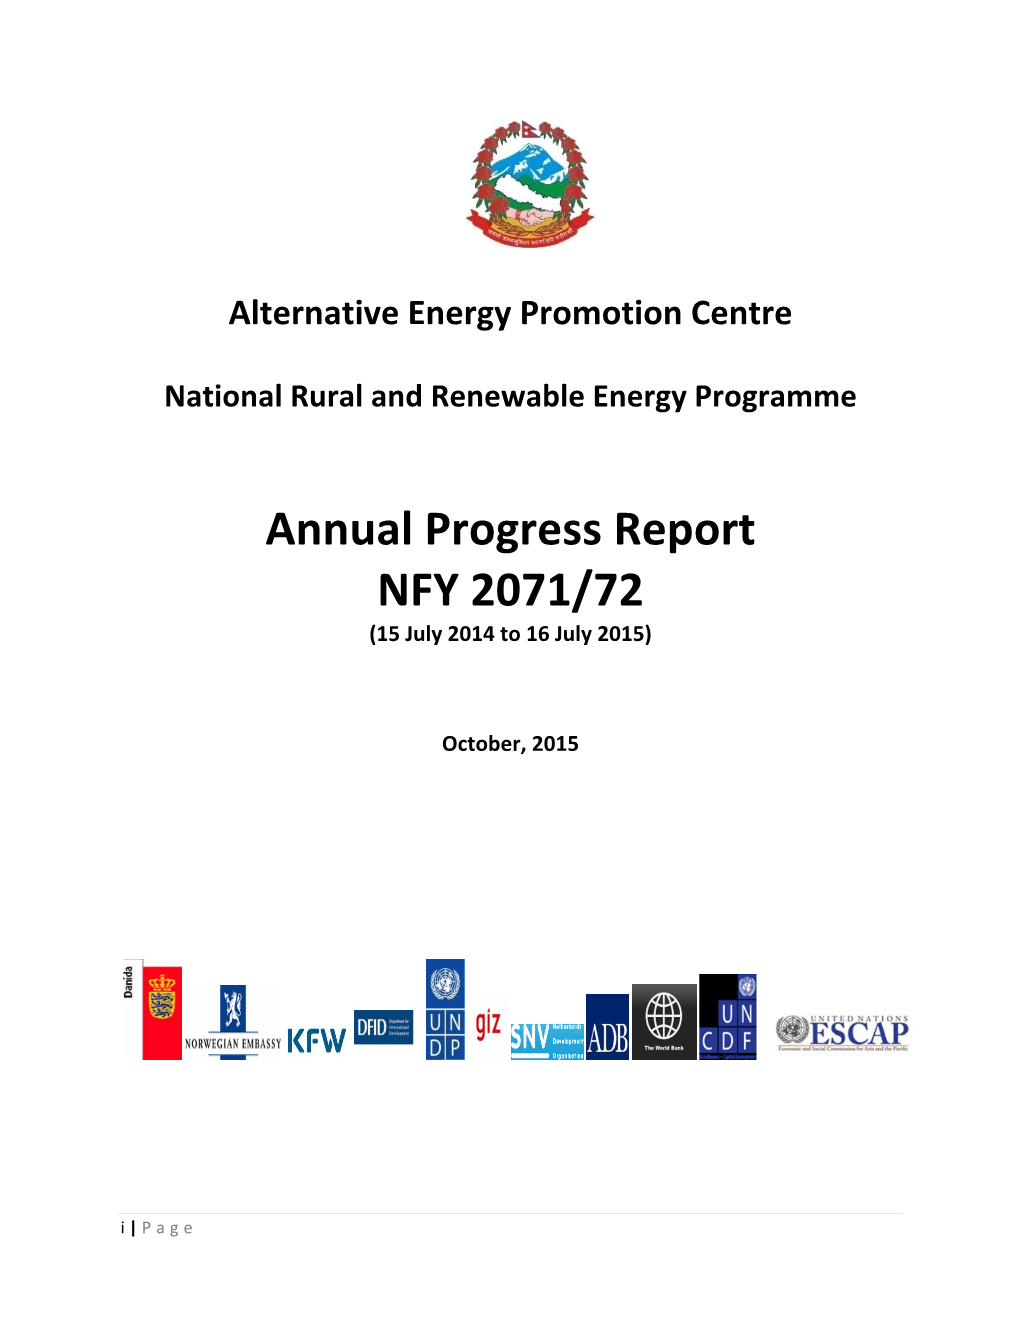 NRREP Annual Progress Report (15 July 2014 to 16 July 2015)